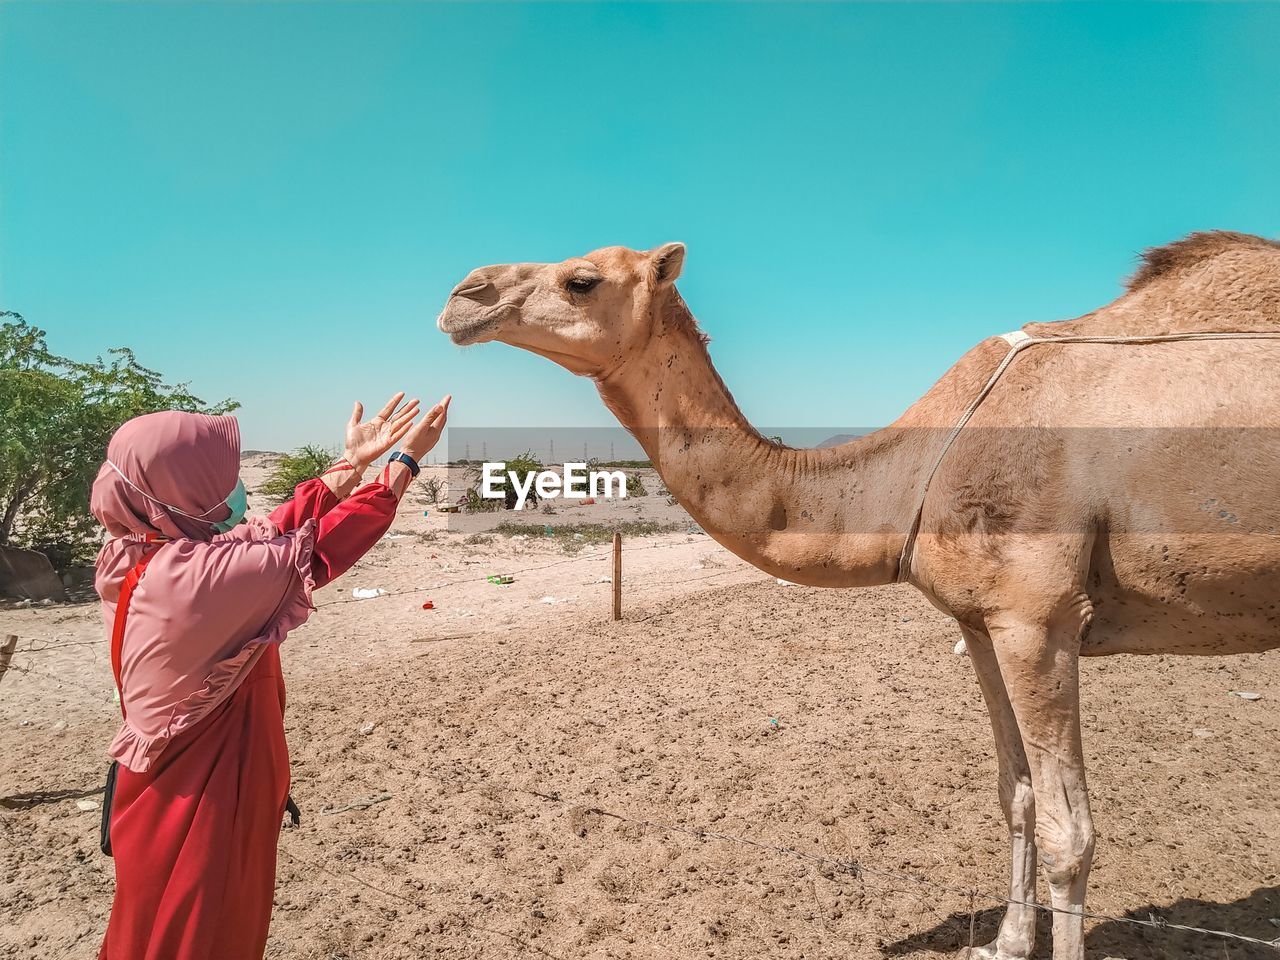 Woman wearing mask gesturing towards camel against sky